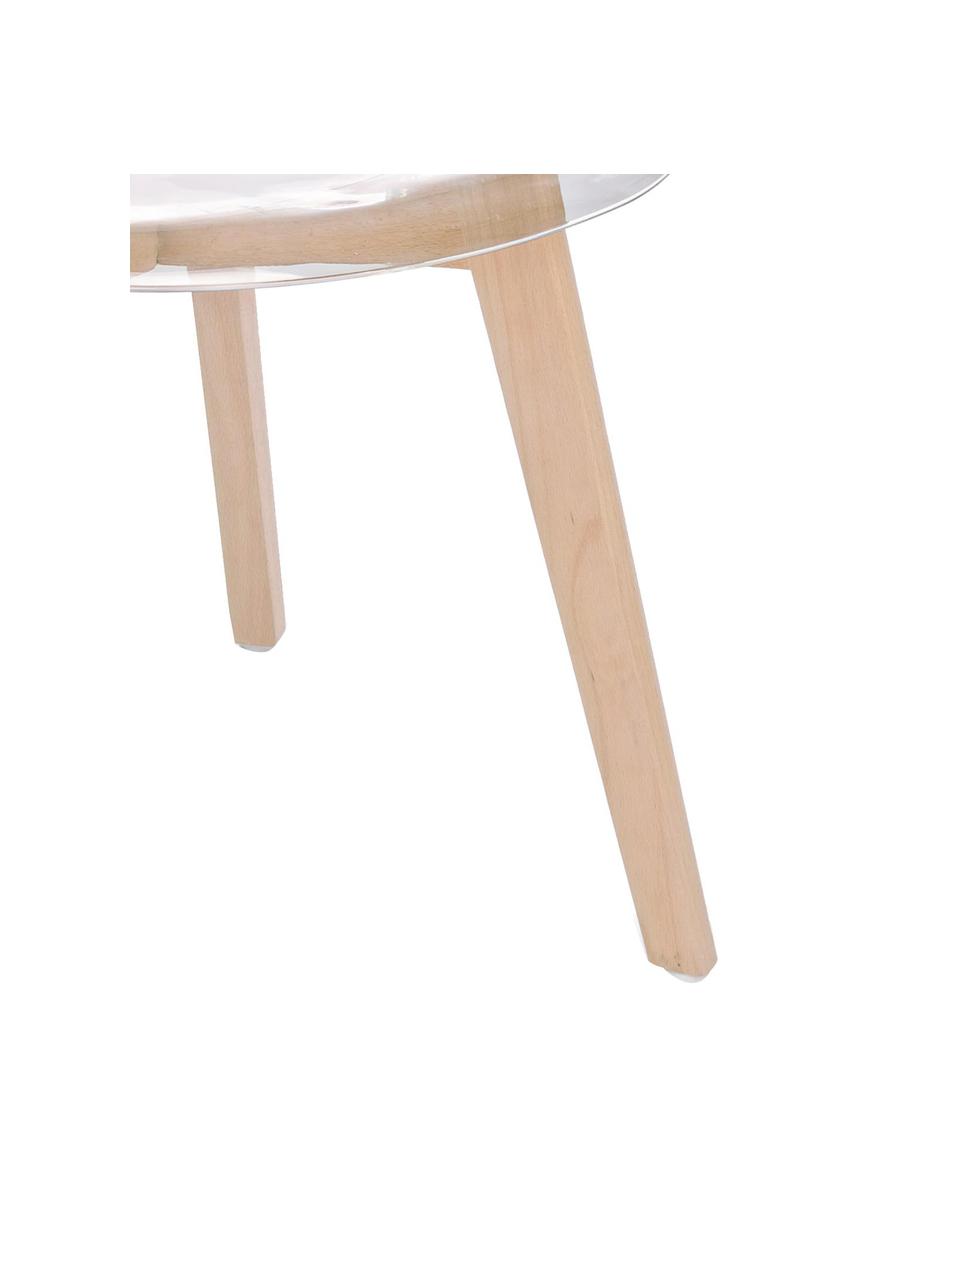 Transparente Stühle Easy, 2 Stück, Sitzfläche: Kunststoff, Beine: Buchenholz, Transparent, Buchenholz, B 51 x T 47 cm